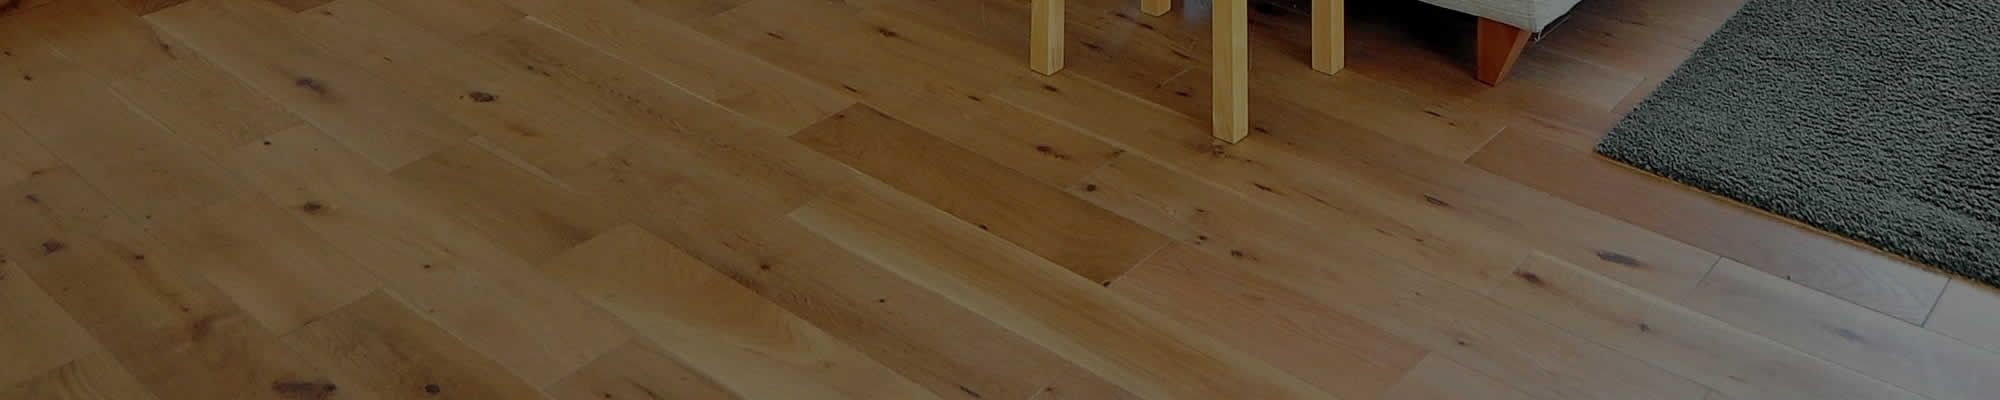 Hardwood Floor Resurfacing West Allis WI